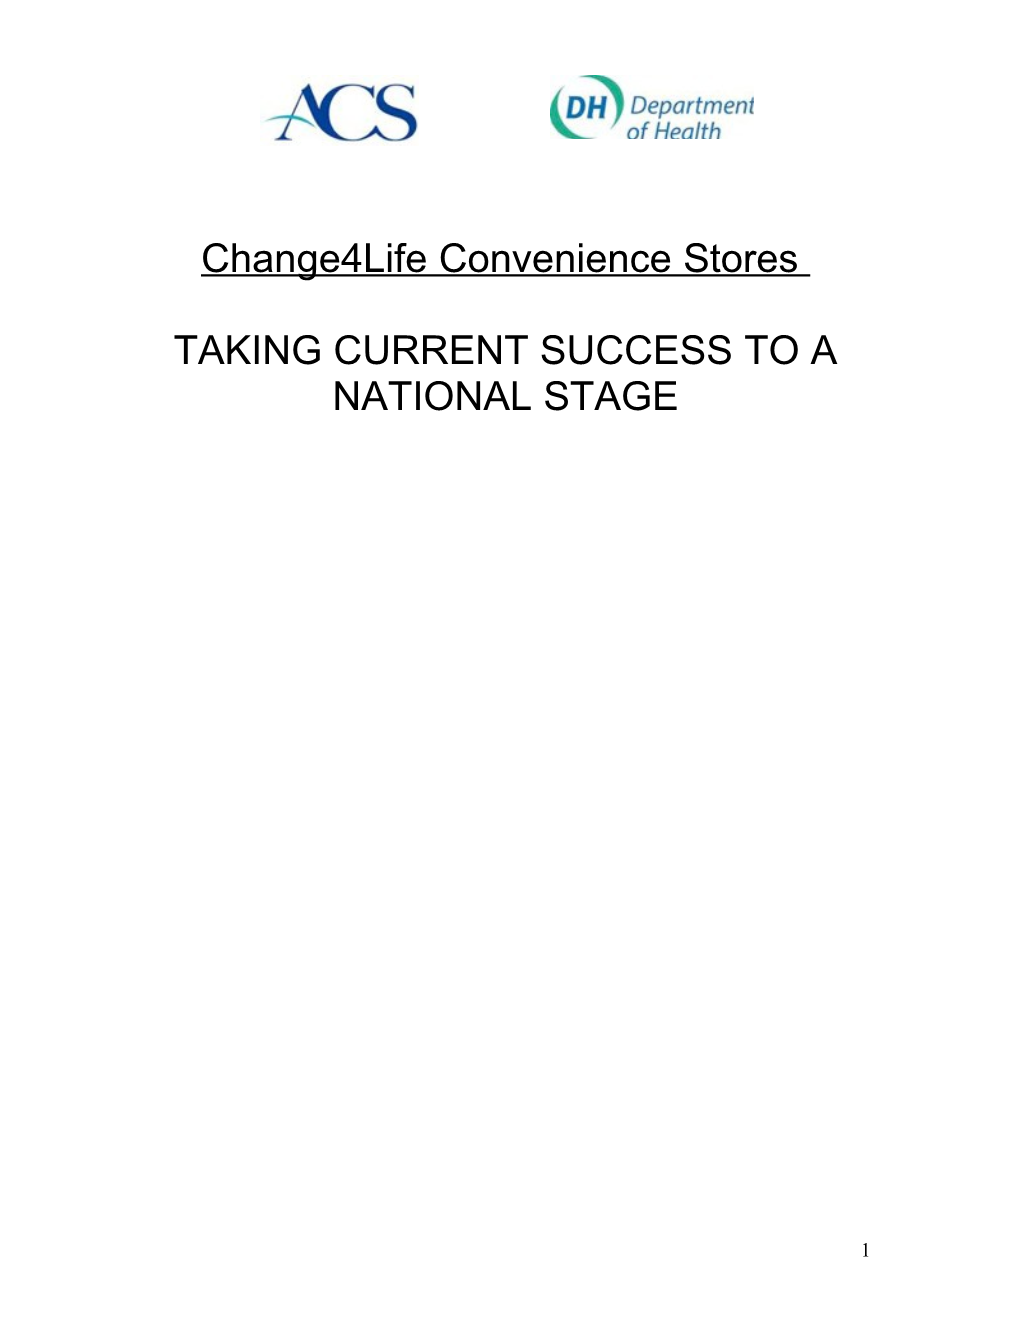 Convenience Stores Change4life Programme